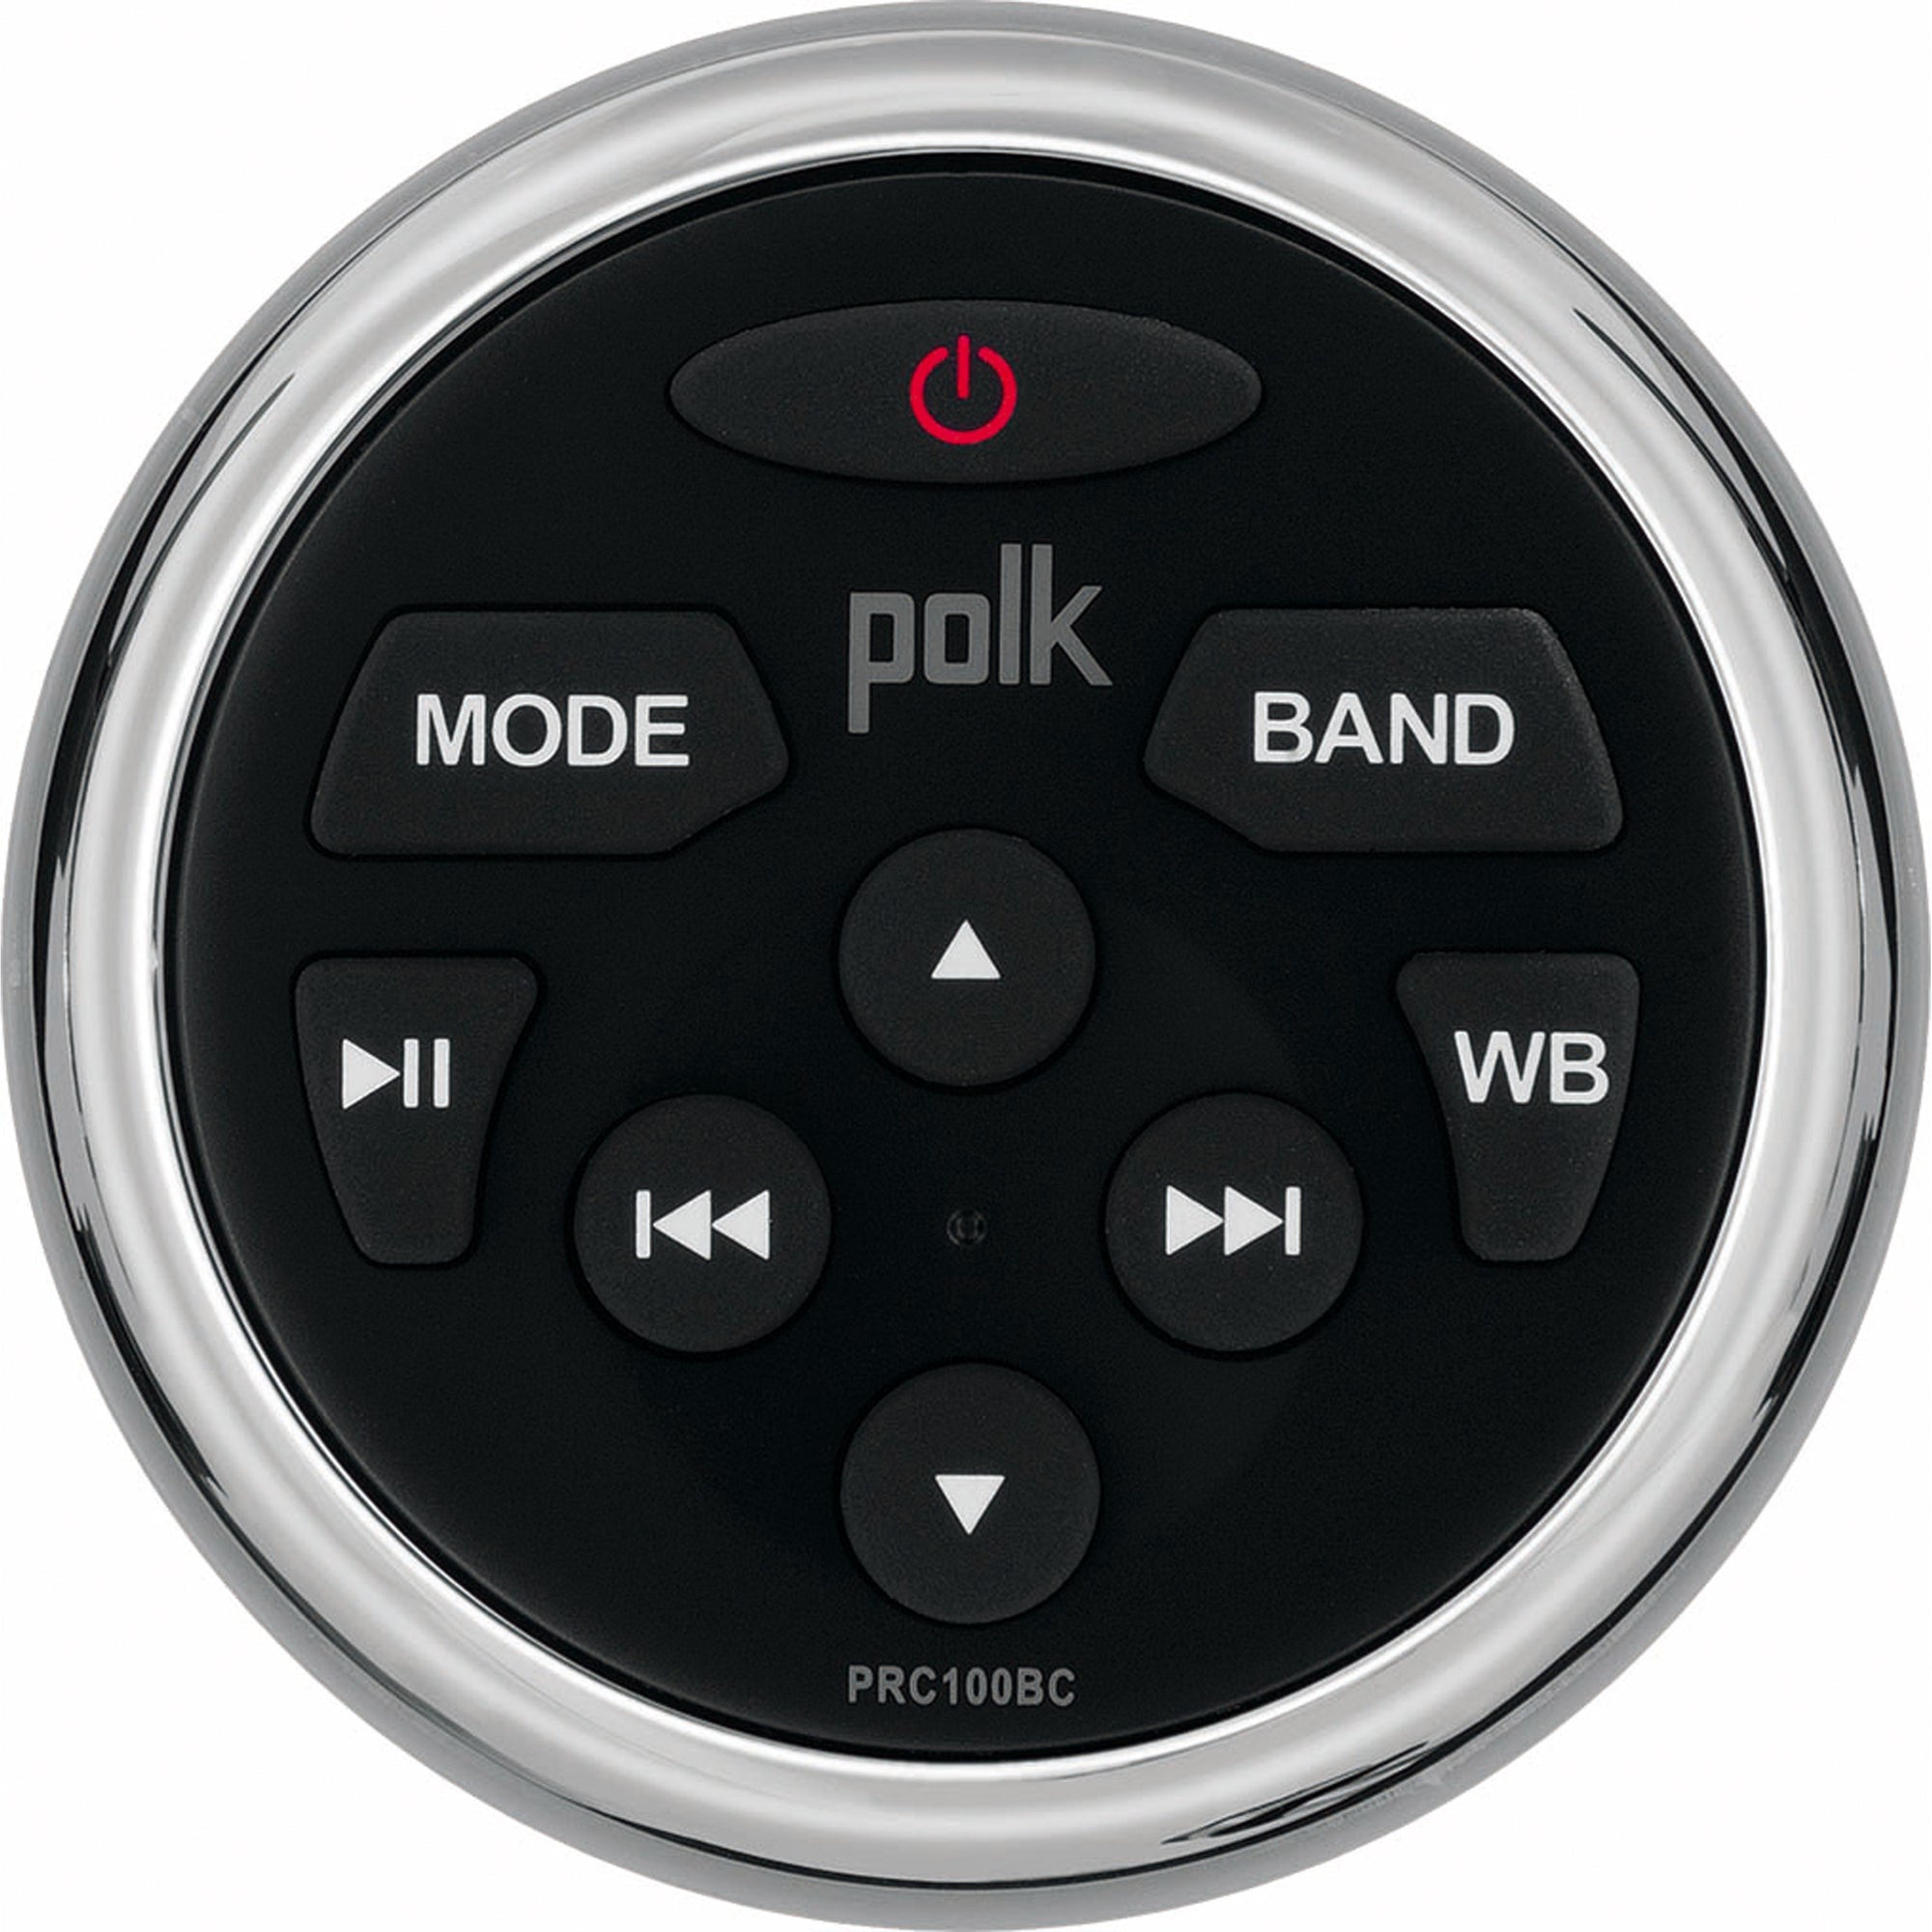 Polk PRC100BC Marine Wired Remote Control - Analog Display